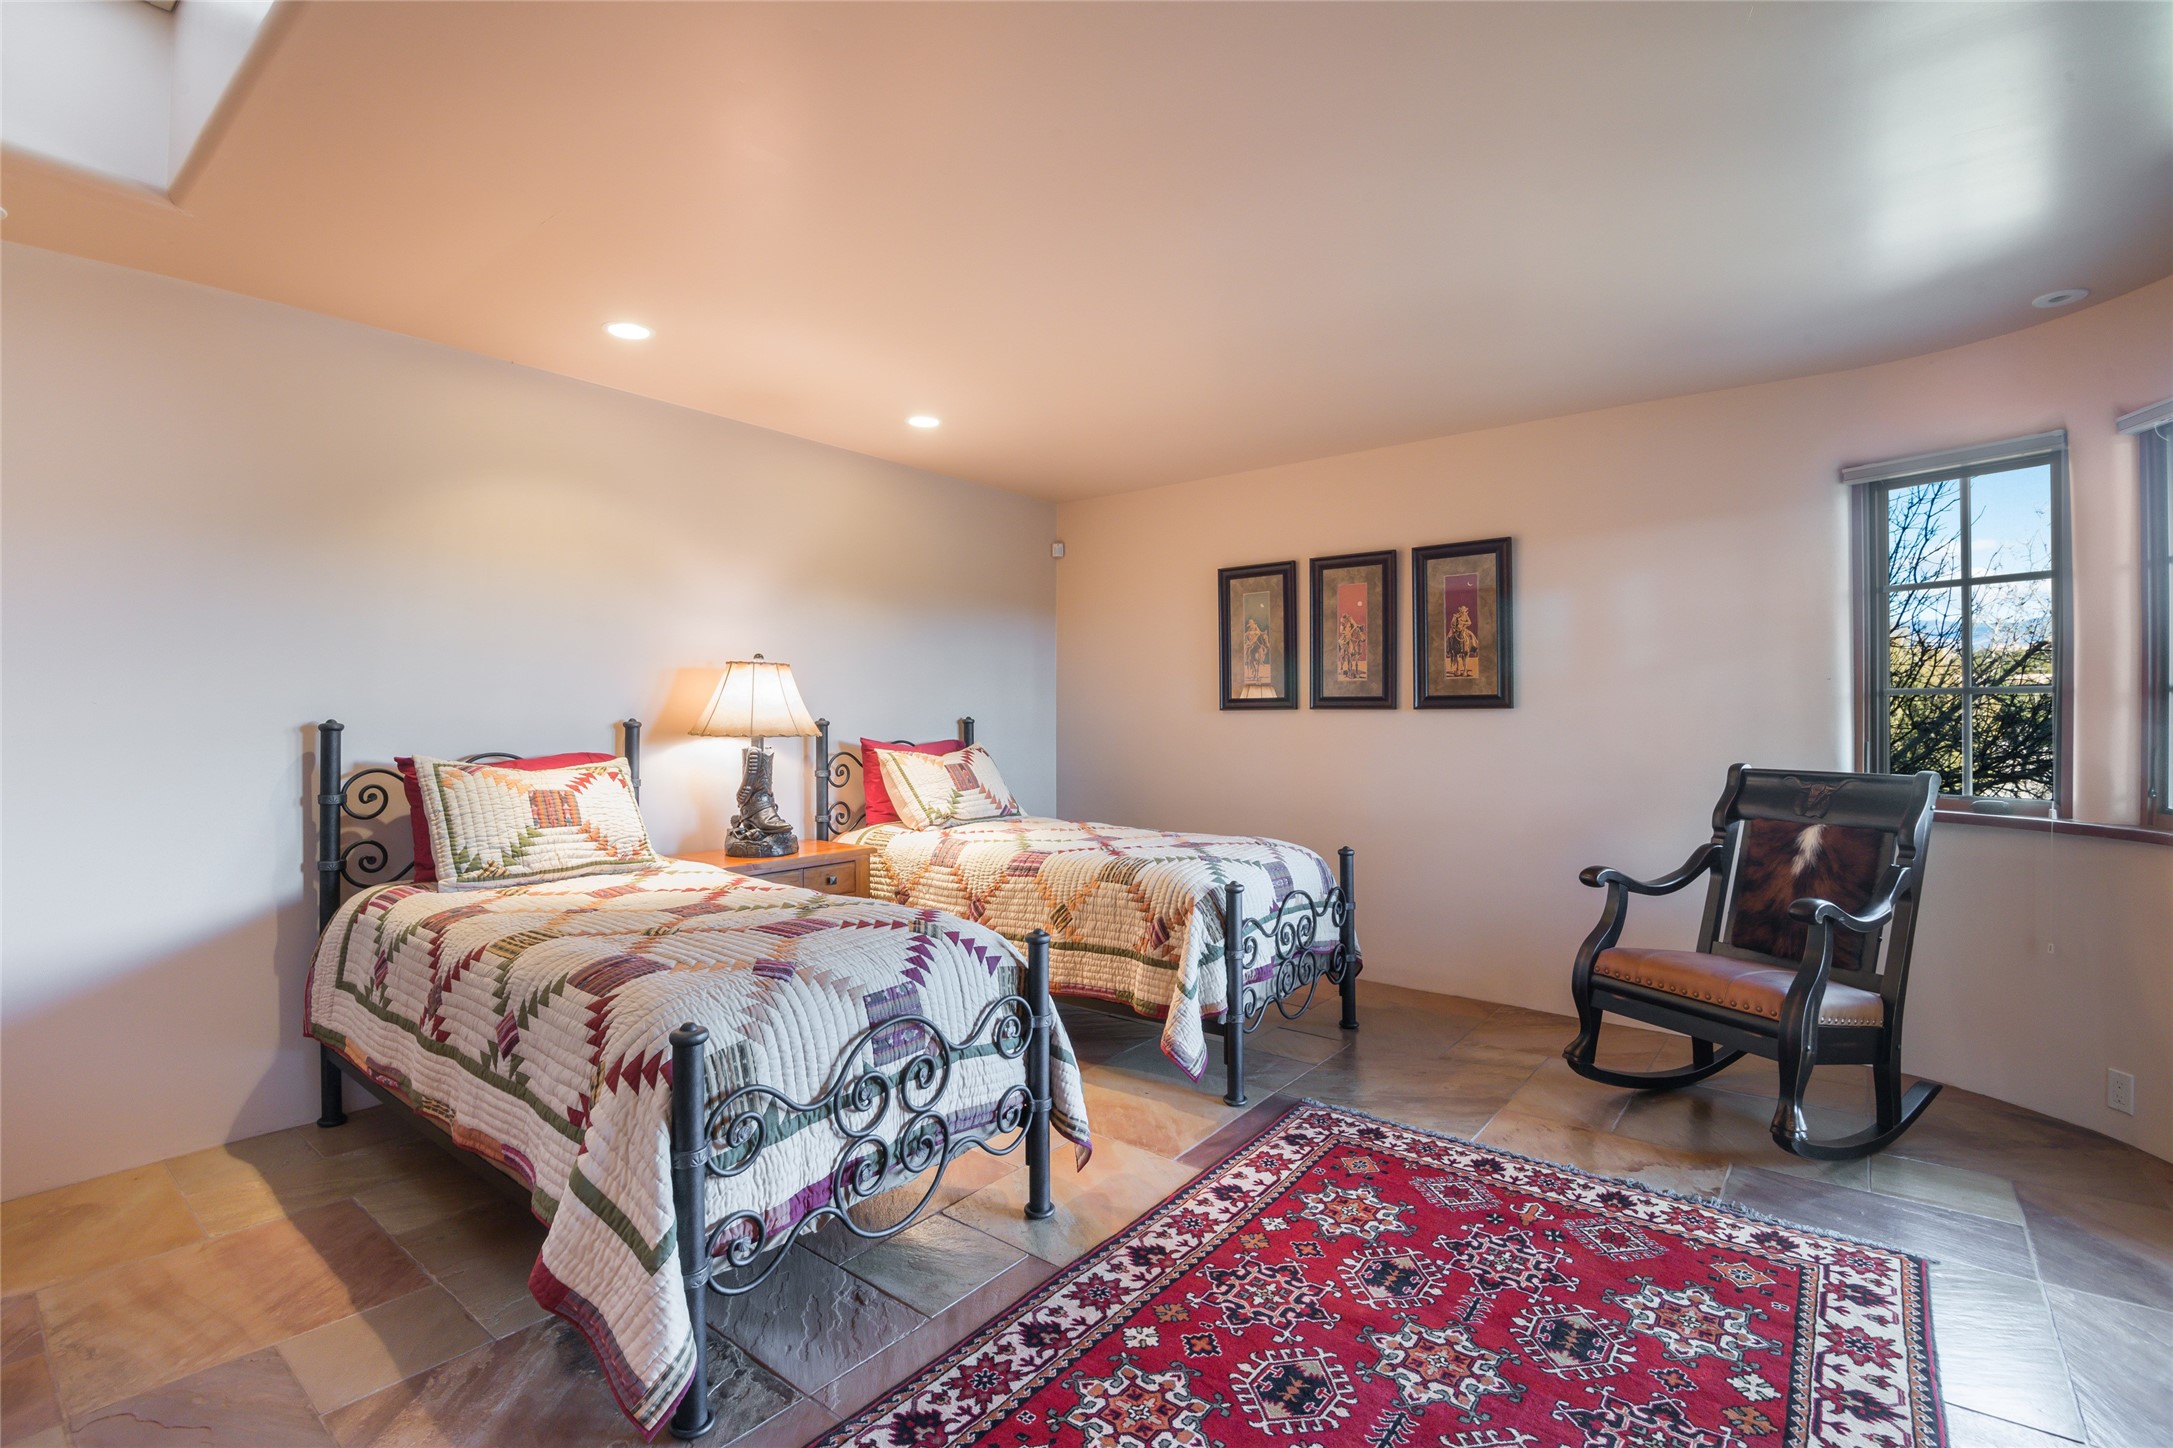 39 Sage Circle, Santa Fe, New Mexico 87506, 3 Bedrooms Bedrooms, ,3 BathroomsBathrooms,Residential,For Sale,39 Sage Circle,202400960